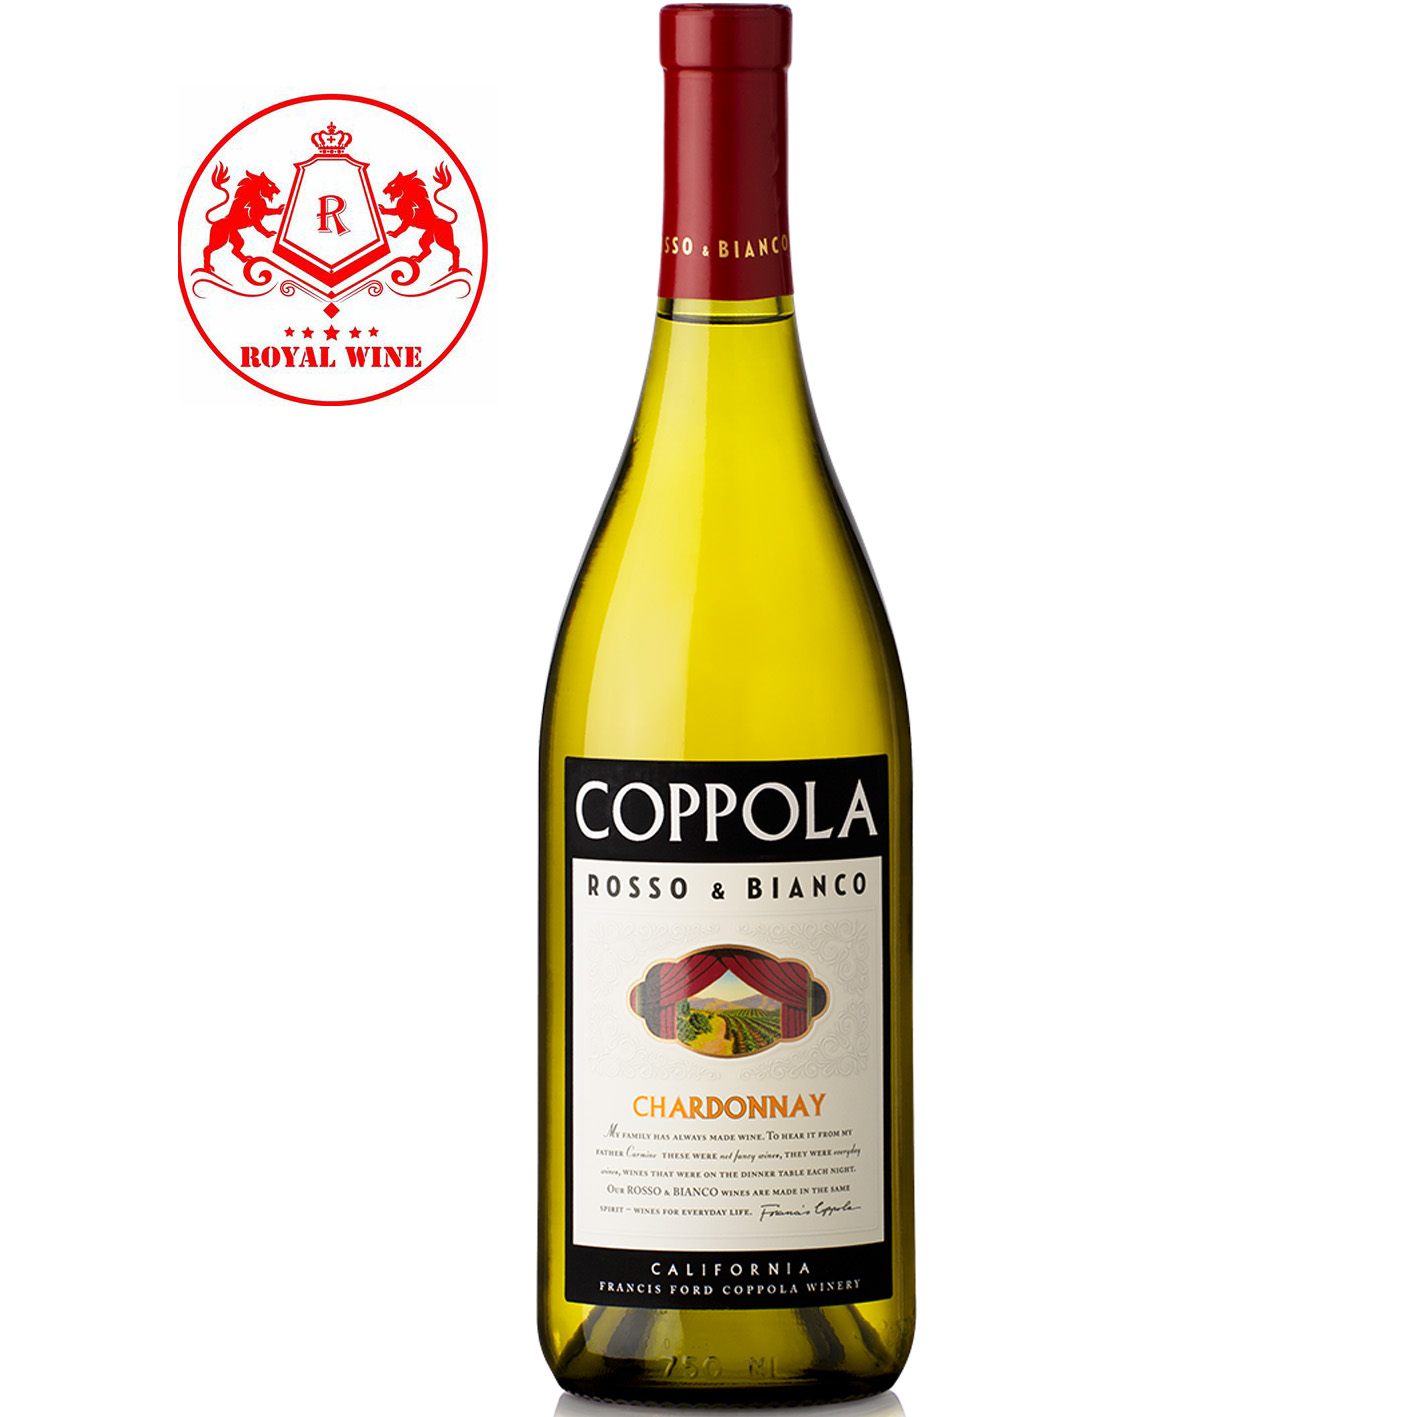 COPPOLA Rosso & Bianco Chardonay